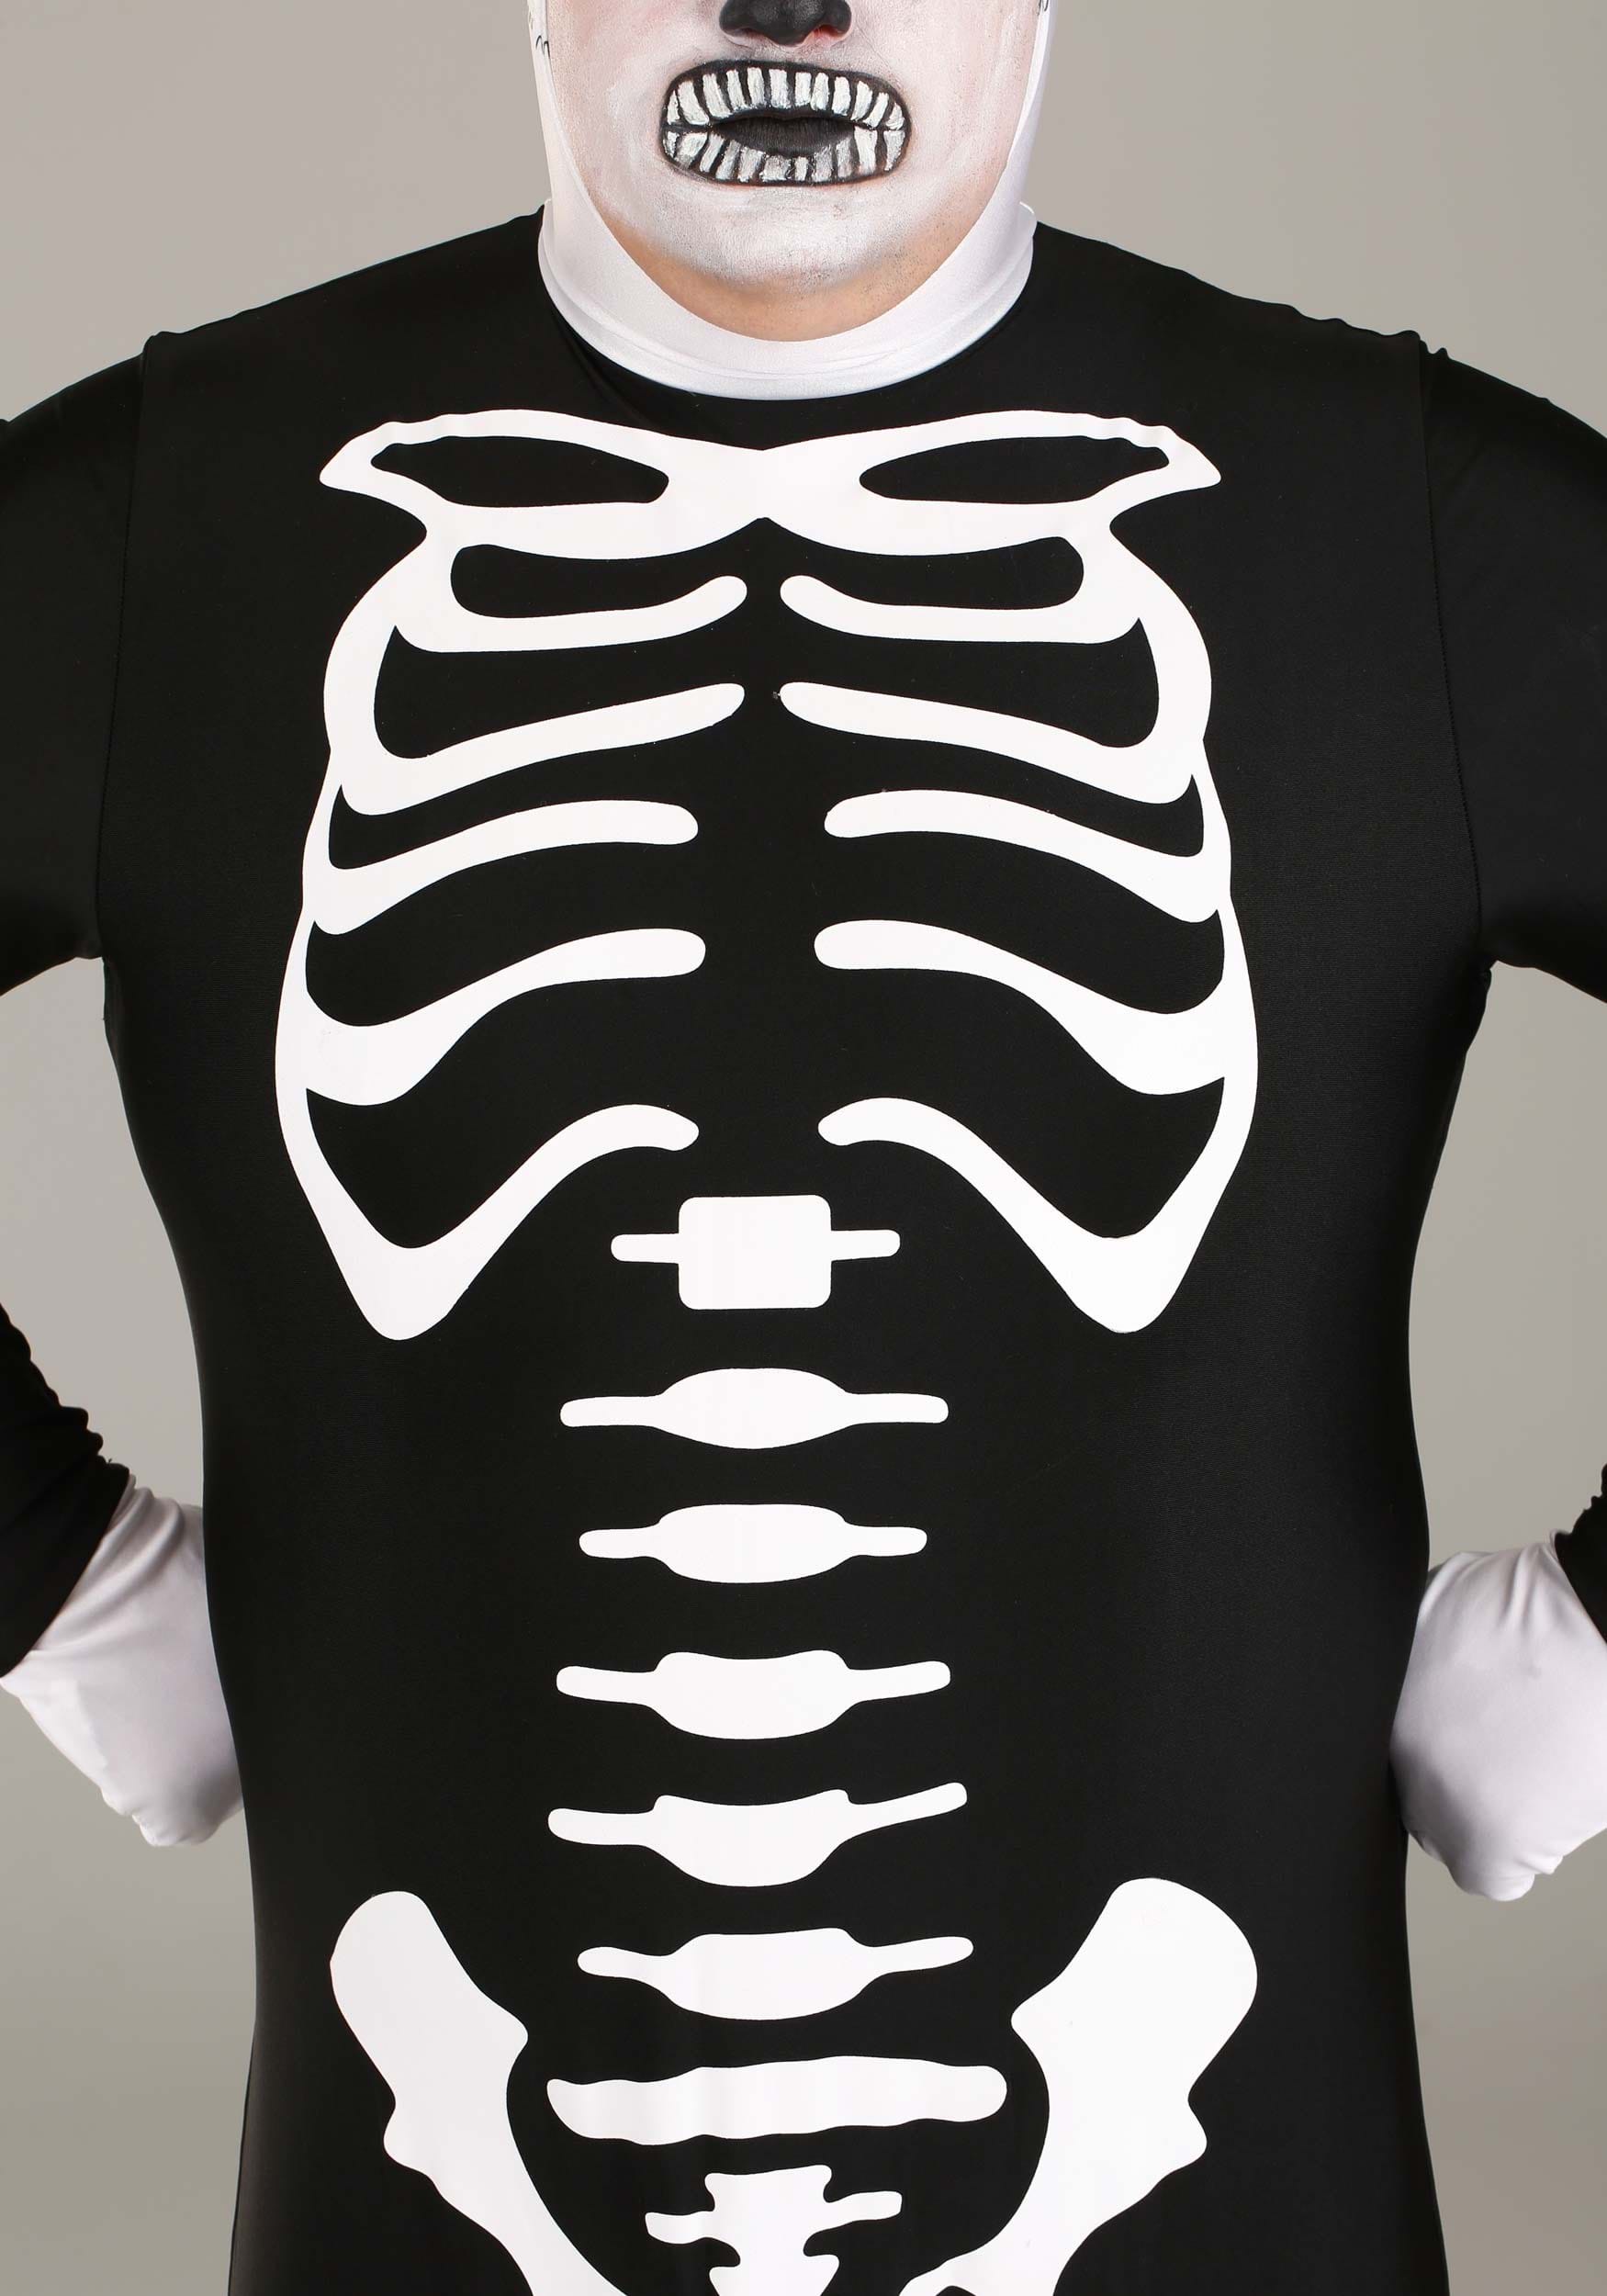 Plus Size Authentic Karate Kid Skeleton Suit , Exclusive Costumes